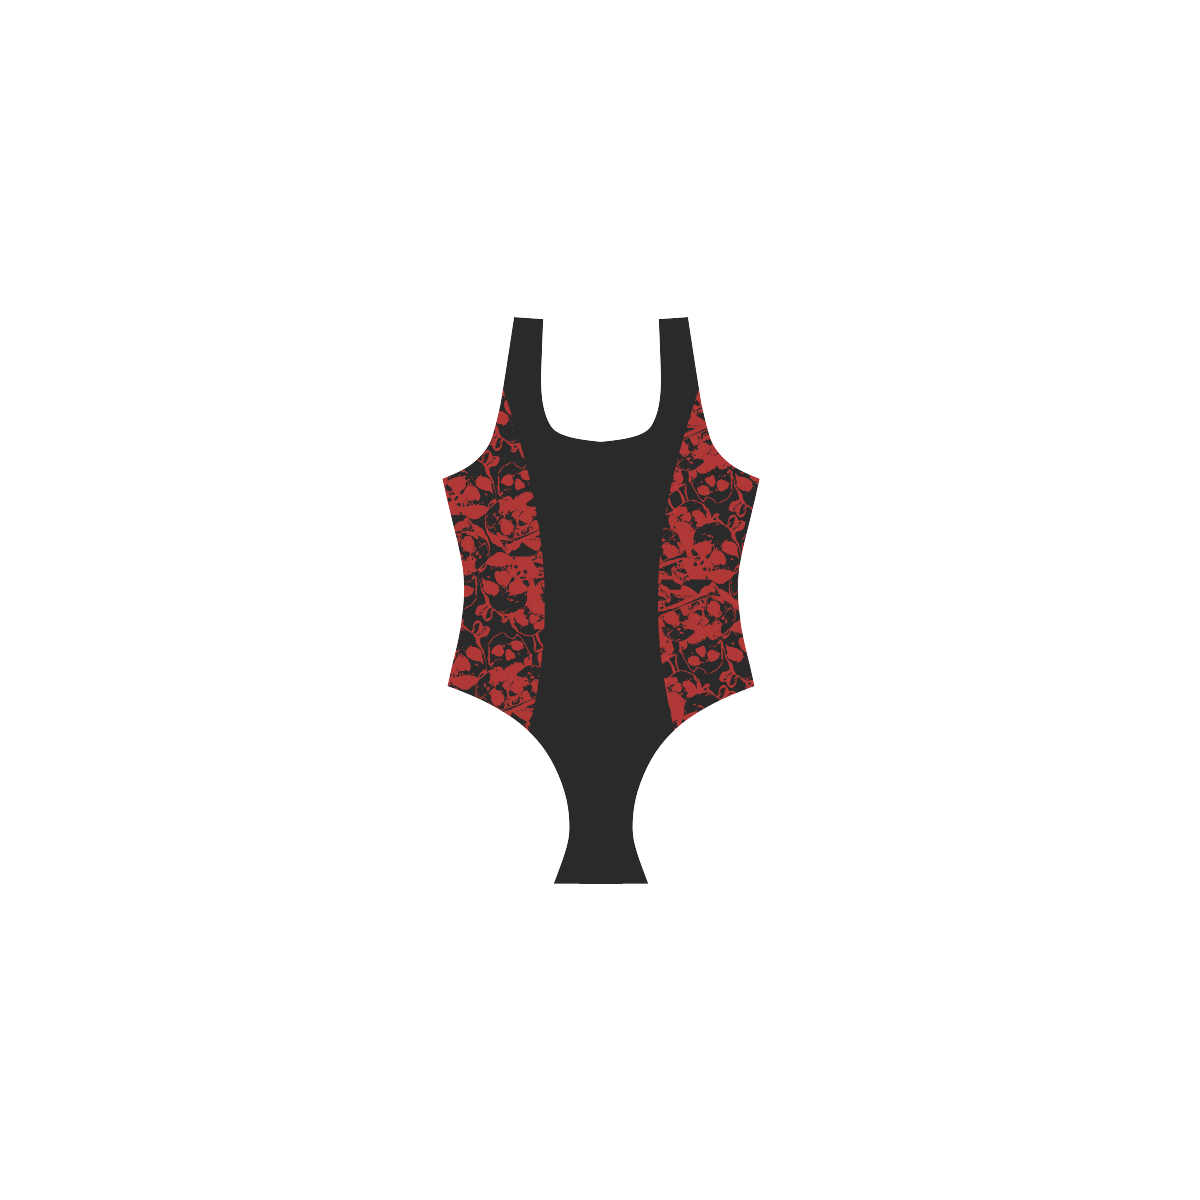 Red Skulls Cutout Goth Art Vest One Piece Swimsuit (Model S04)